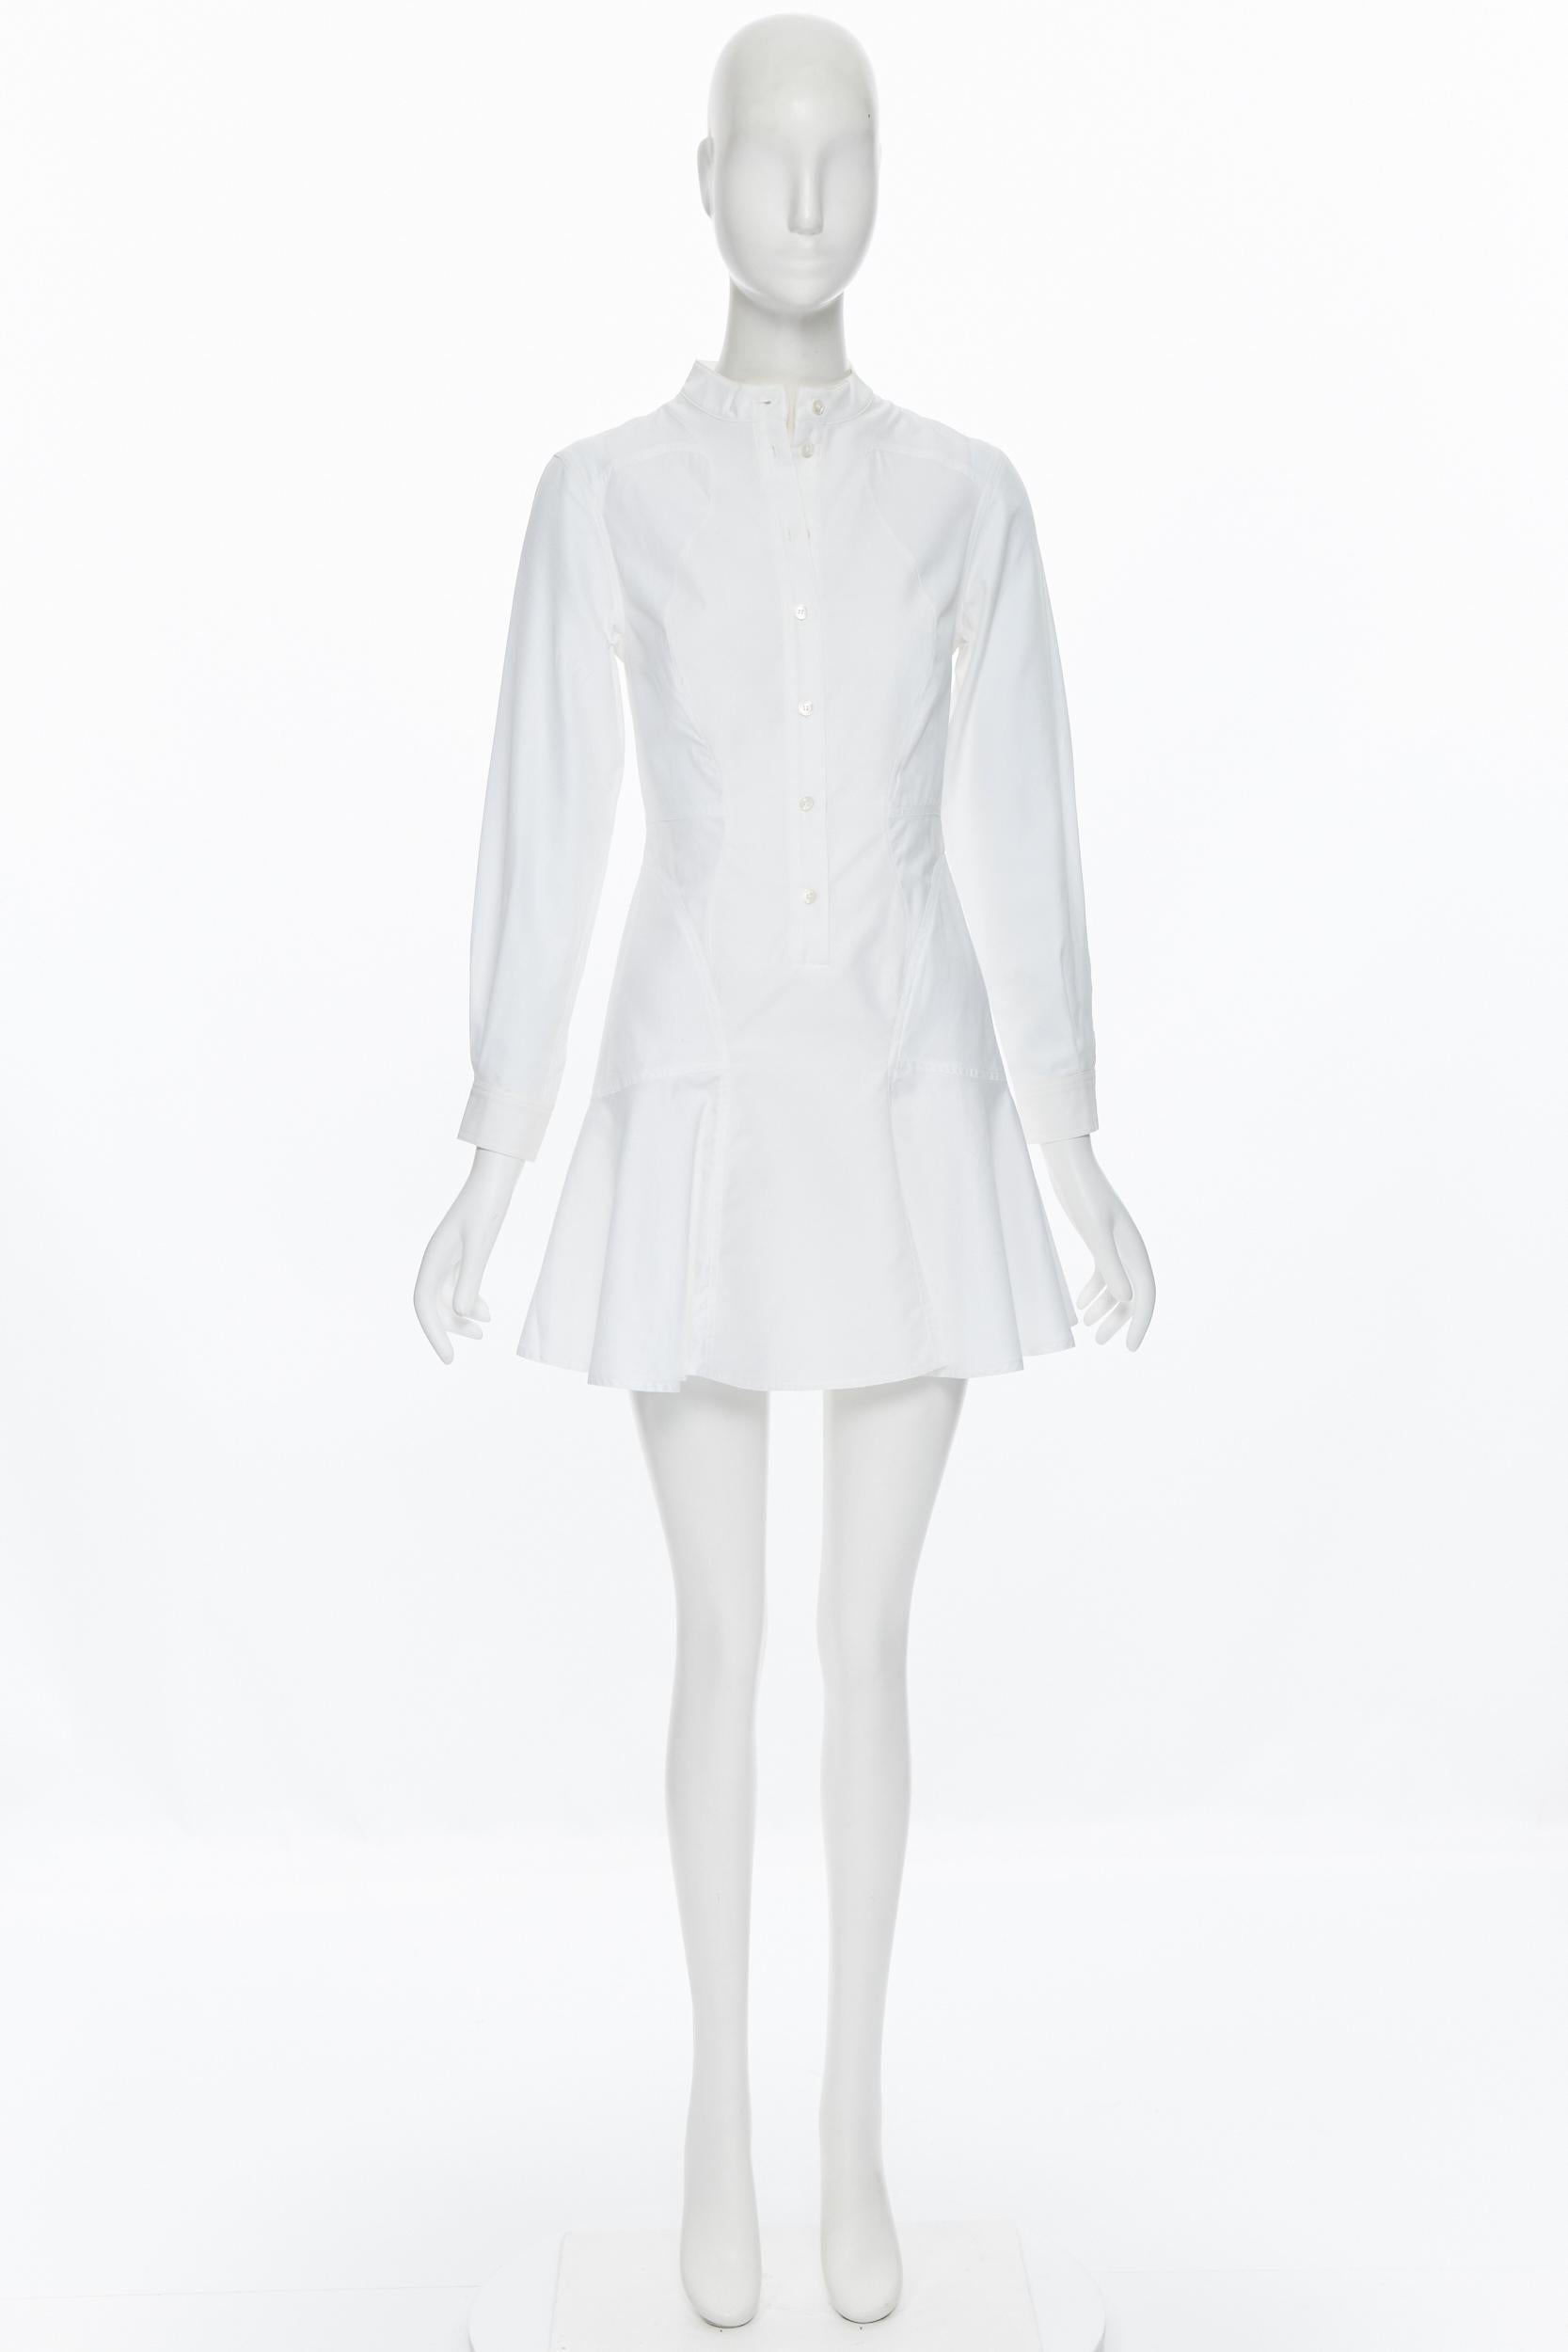 Gray STELLA MCCARTNEY 100% cotton white contour panel fit flared dress IT36 XS